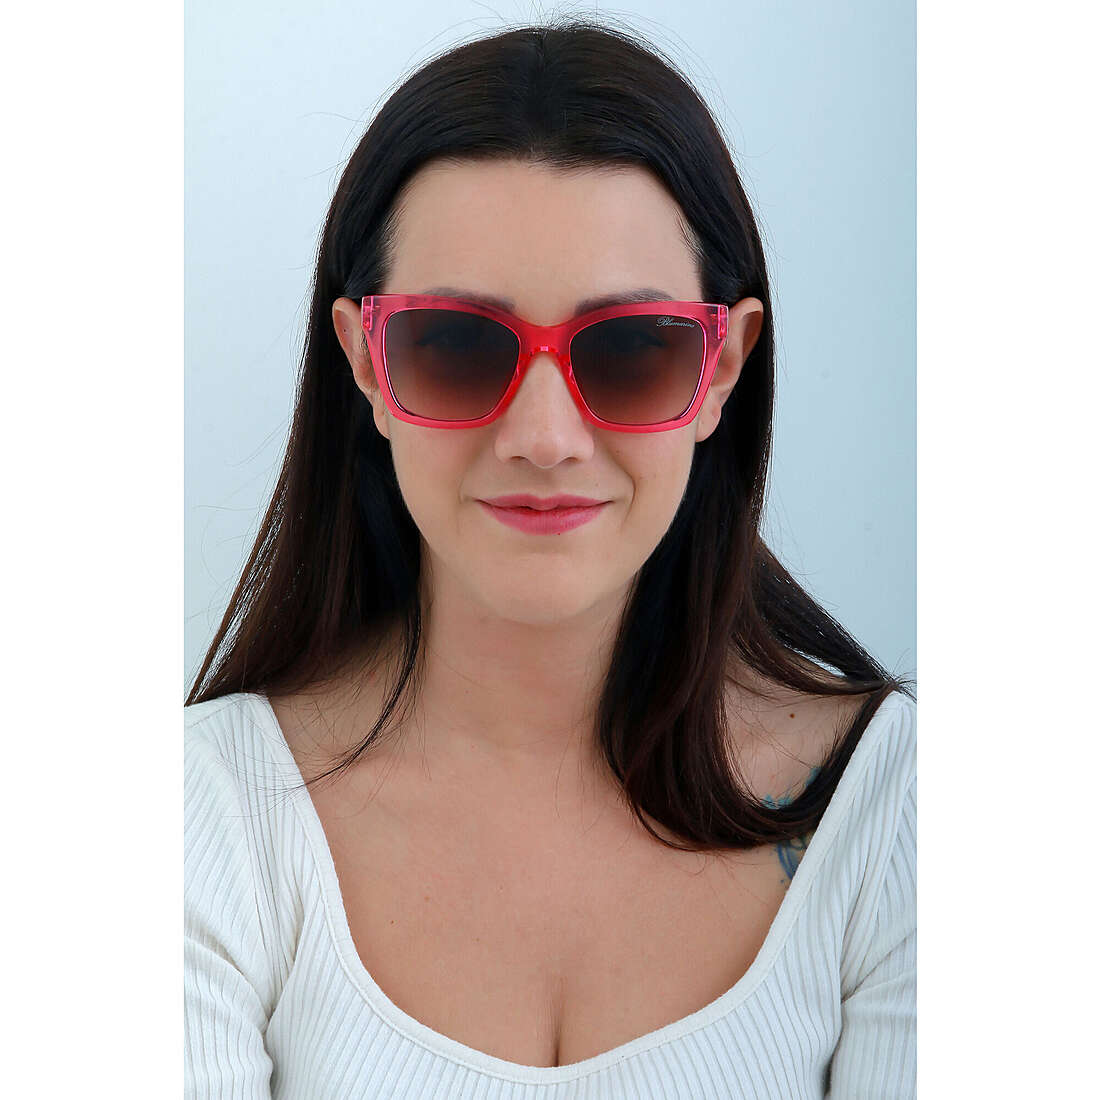 Blumarine occhiali da sole donna SBM80503GB indosso